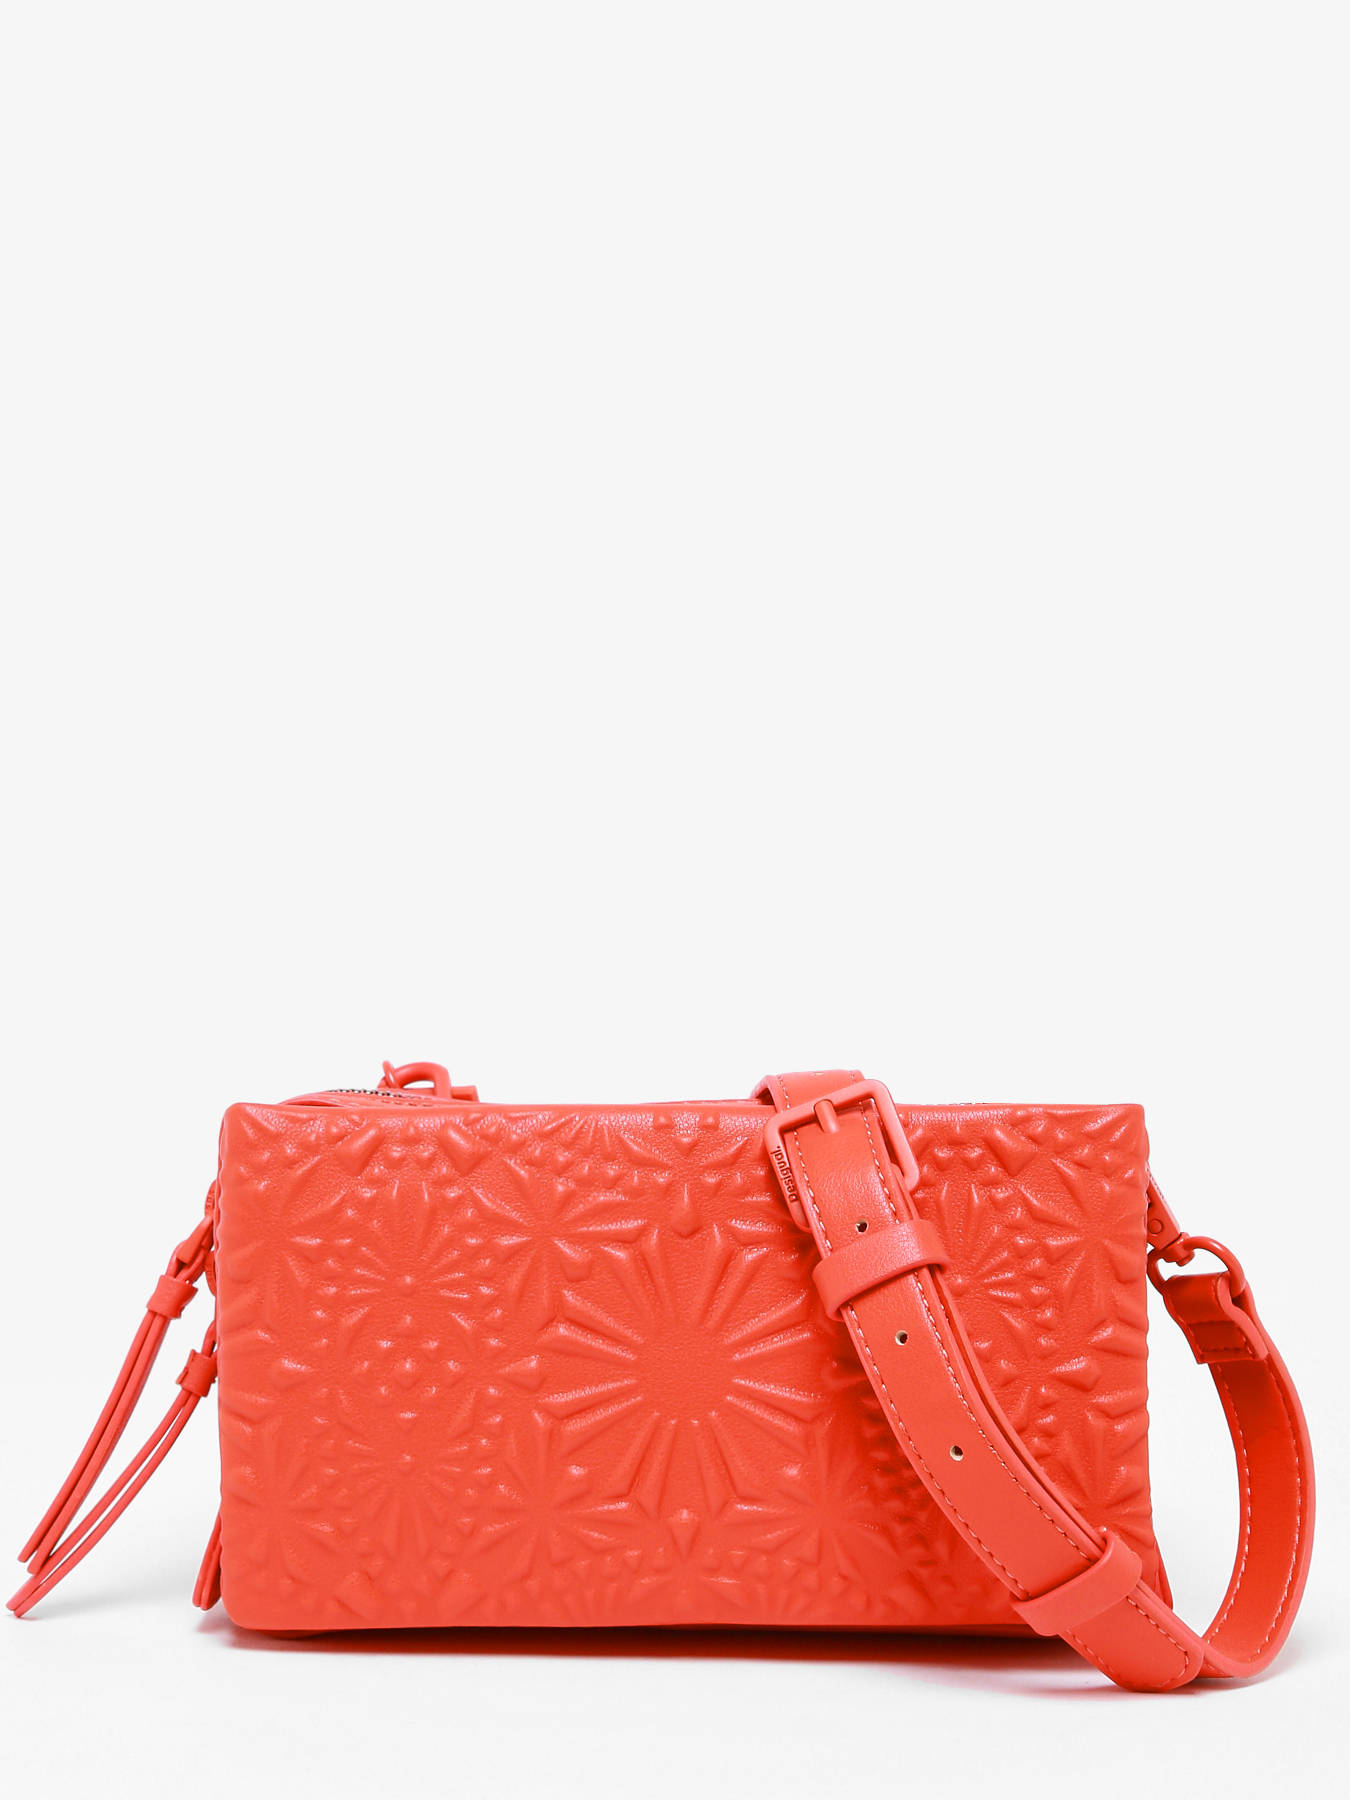 Buy Enigma Black & Brown Ladies Handbag (232) at Best Prices in India -  Snapdeal